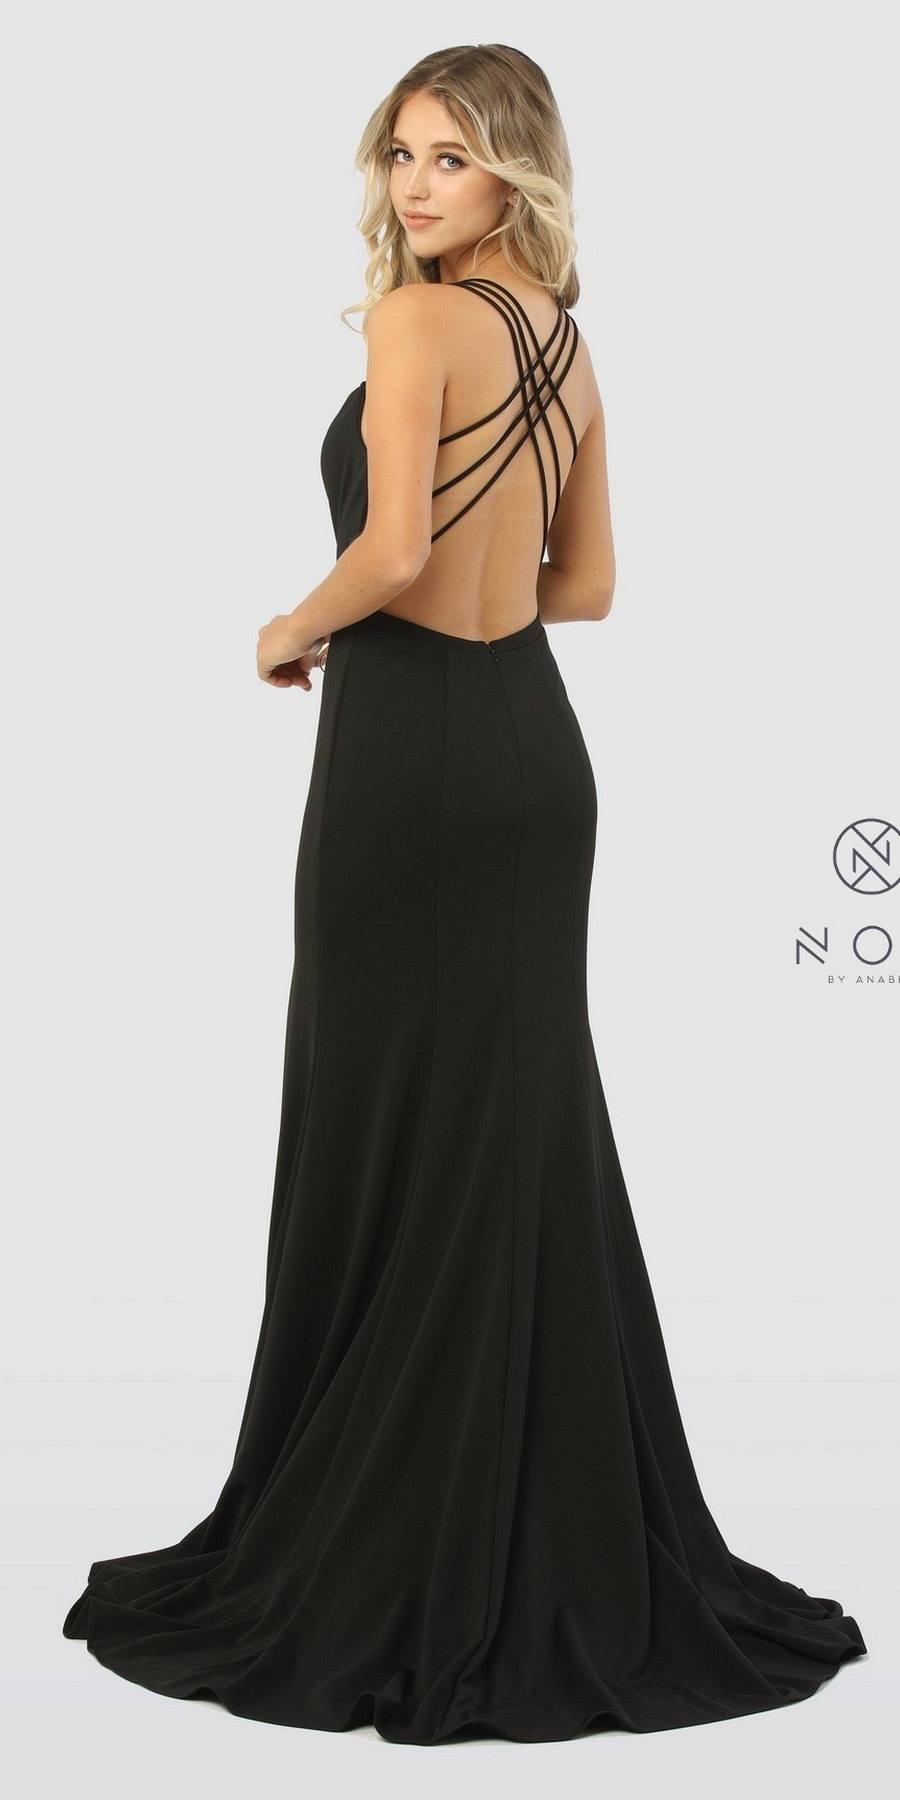 Strappy Back Long Black Prom Dress with Slit 